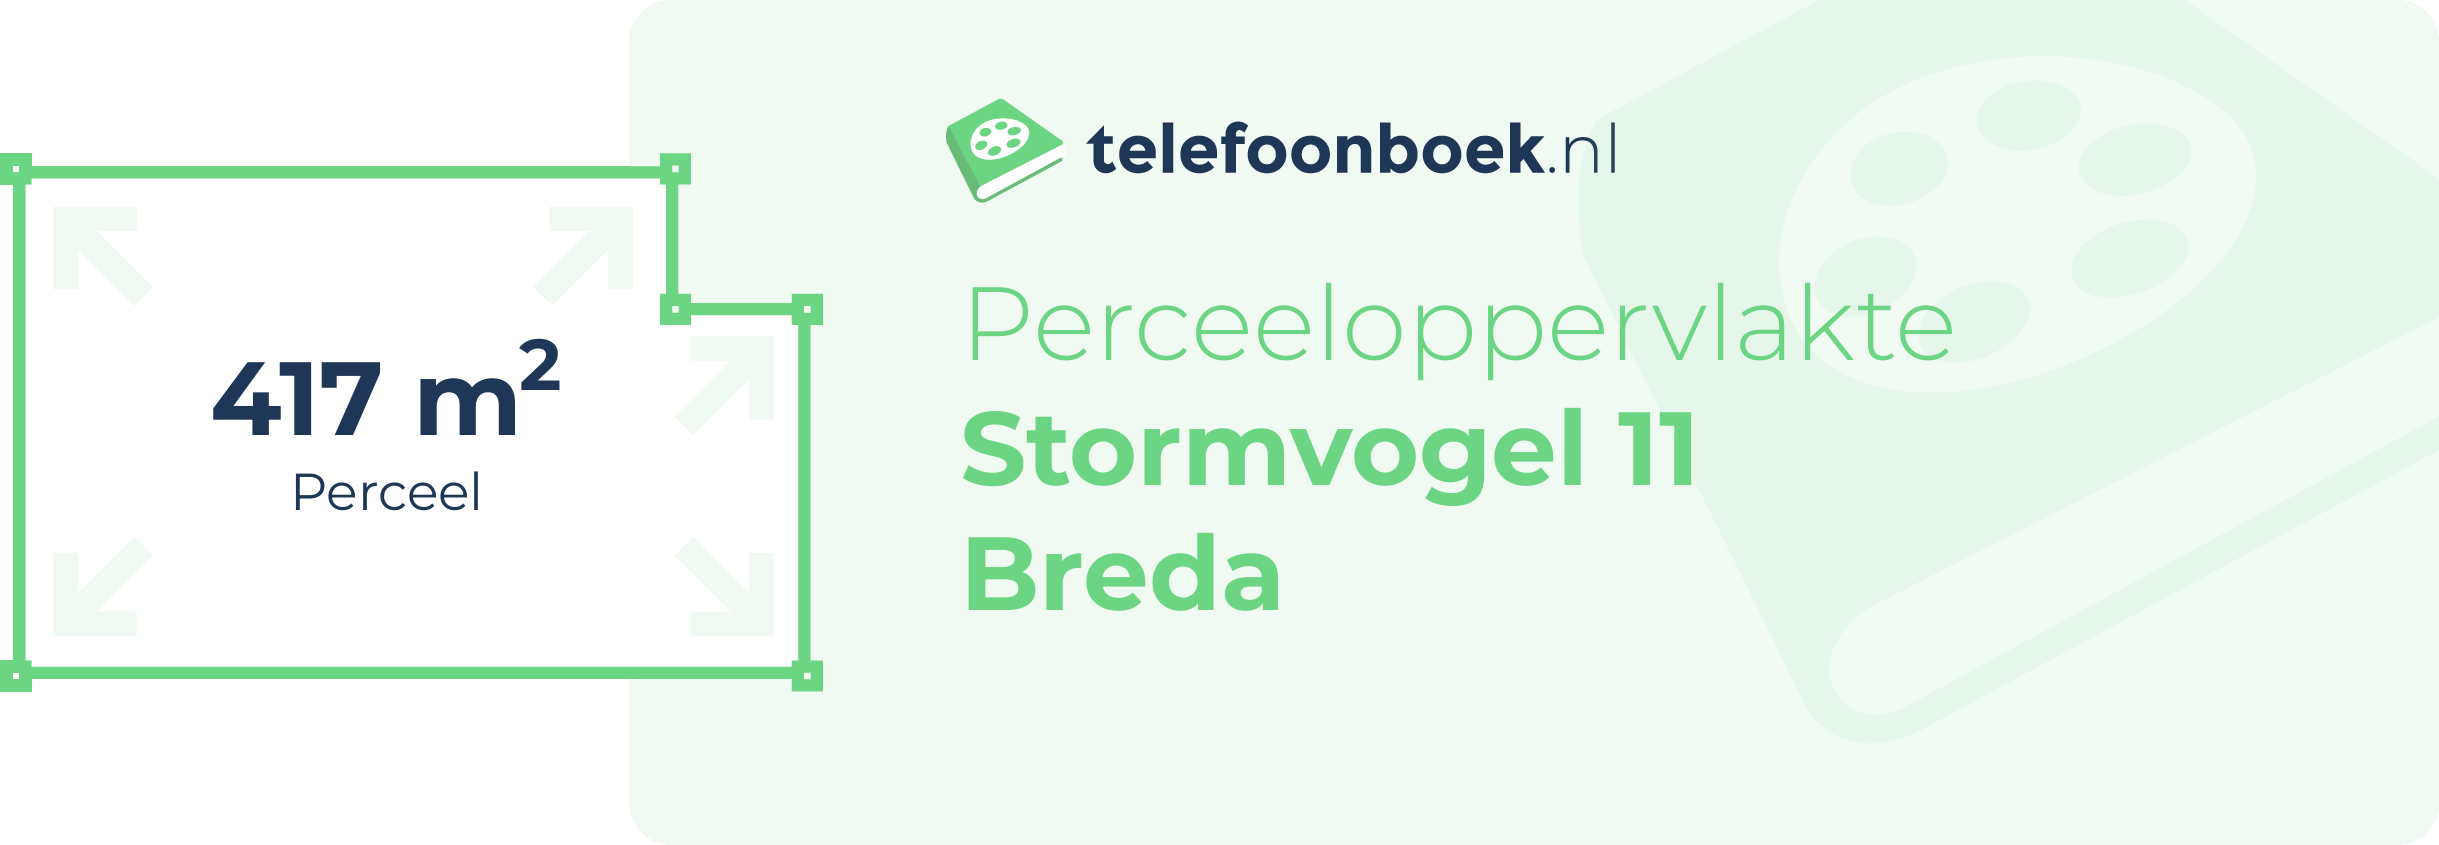 Perceeloppervlakte Stormvogel 11 Breda